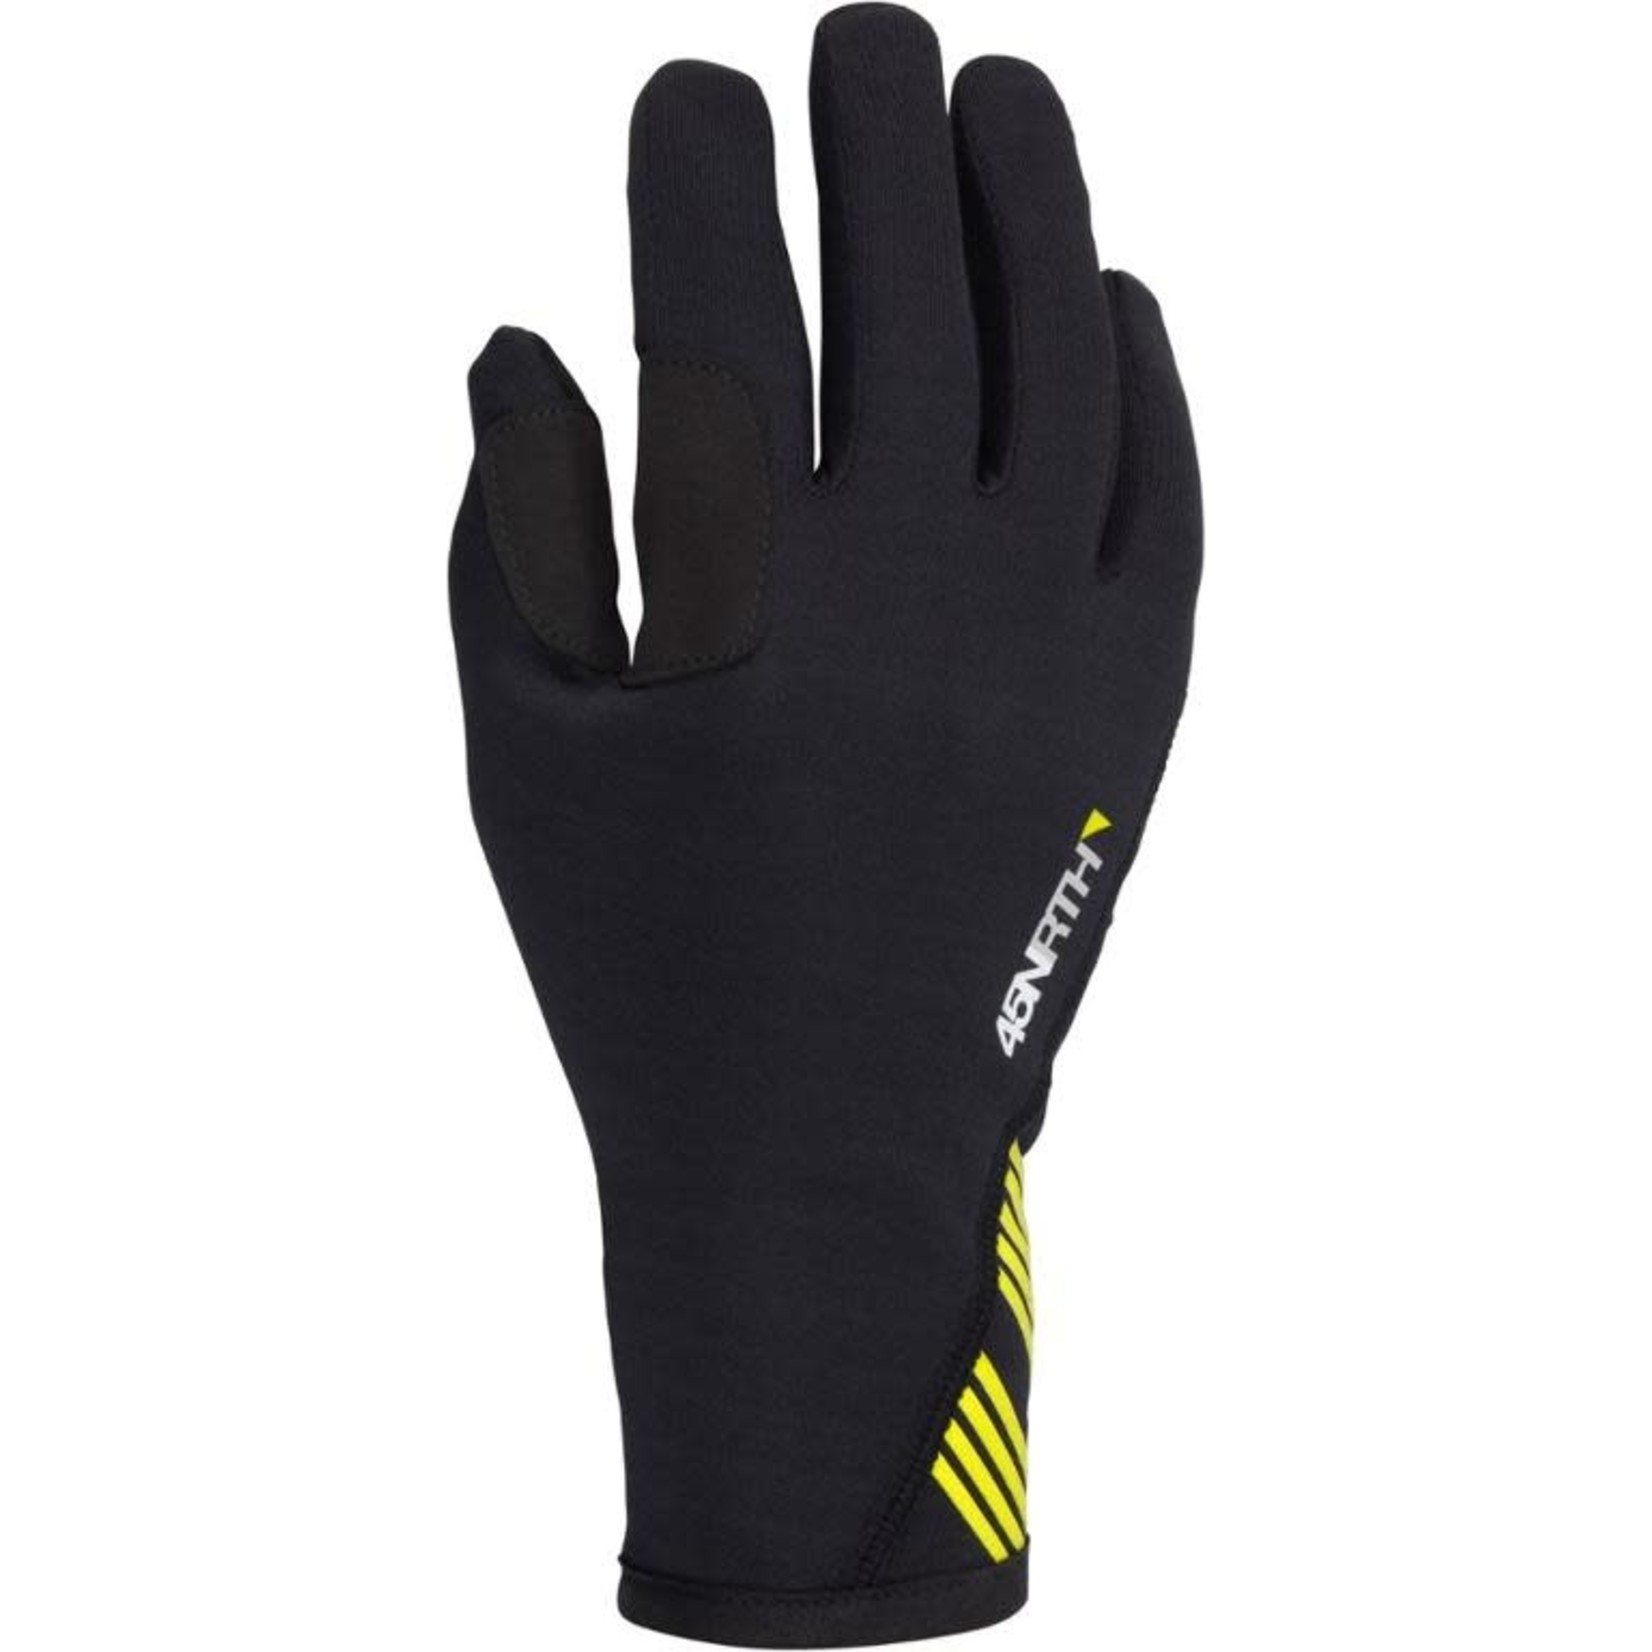 45NRTH 45NRTH Risor Merino Liner Glove: Black XL (size 10)